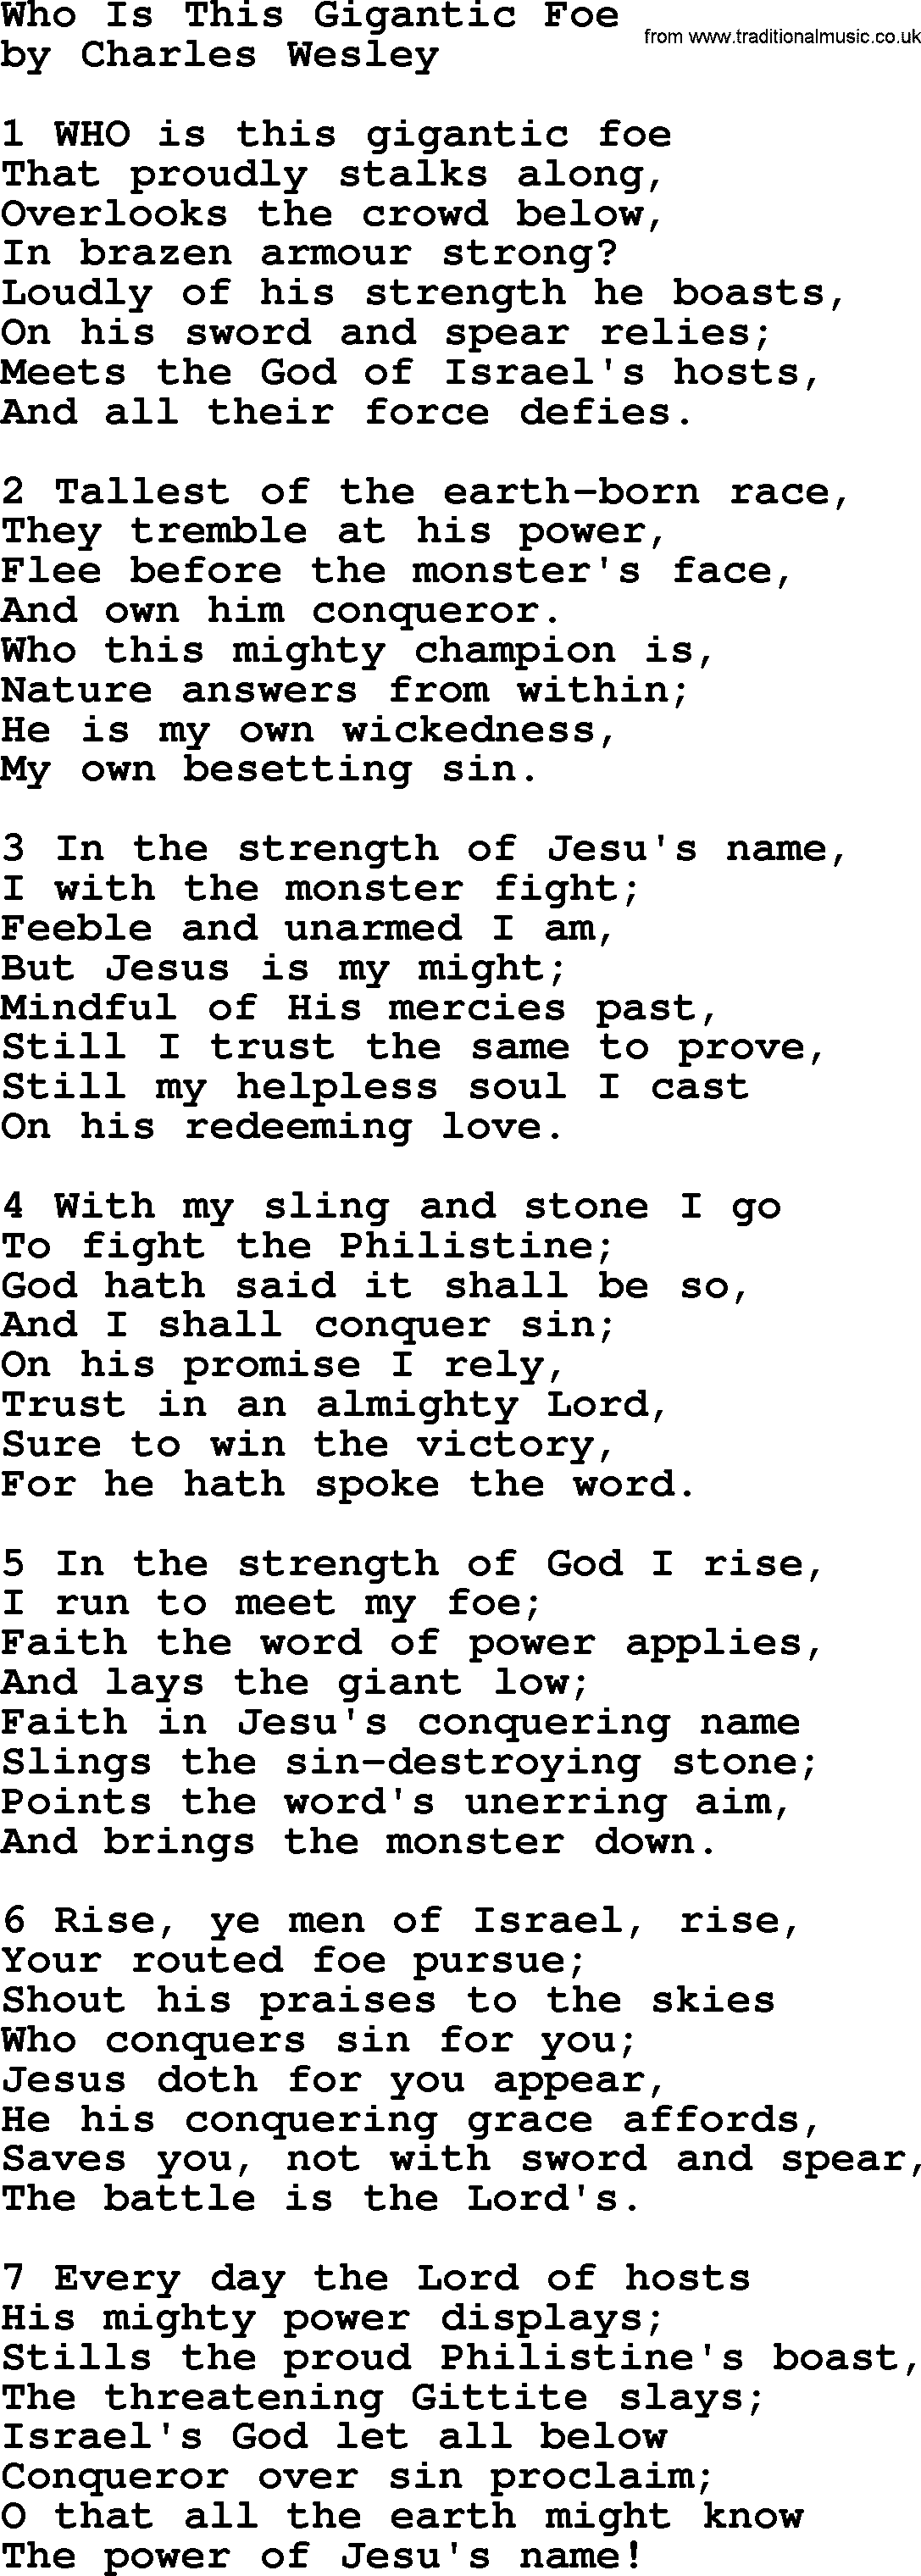 Charles Wesley hymn: Who Is This Gigantic Foe, lyrics